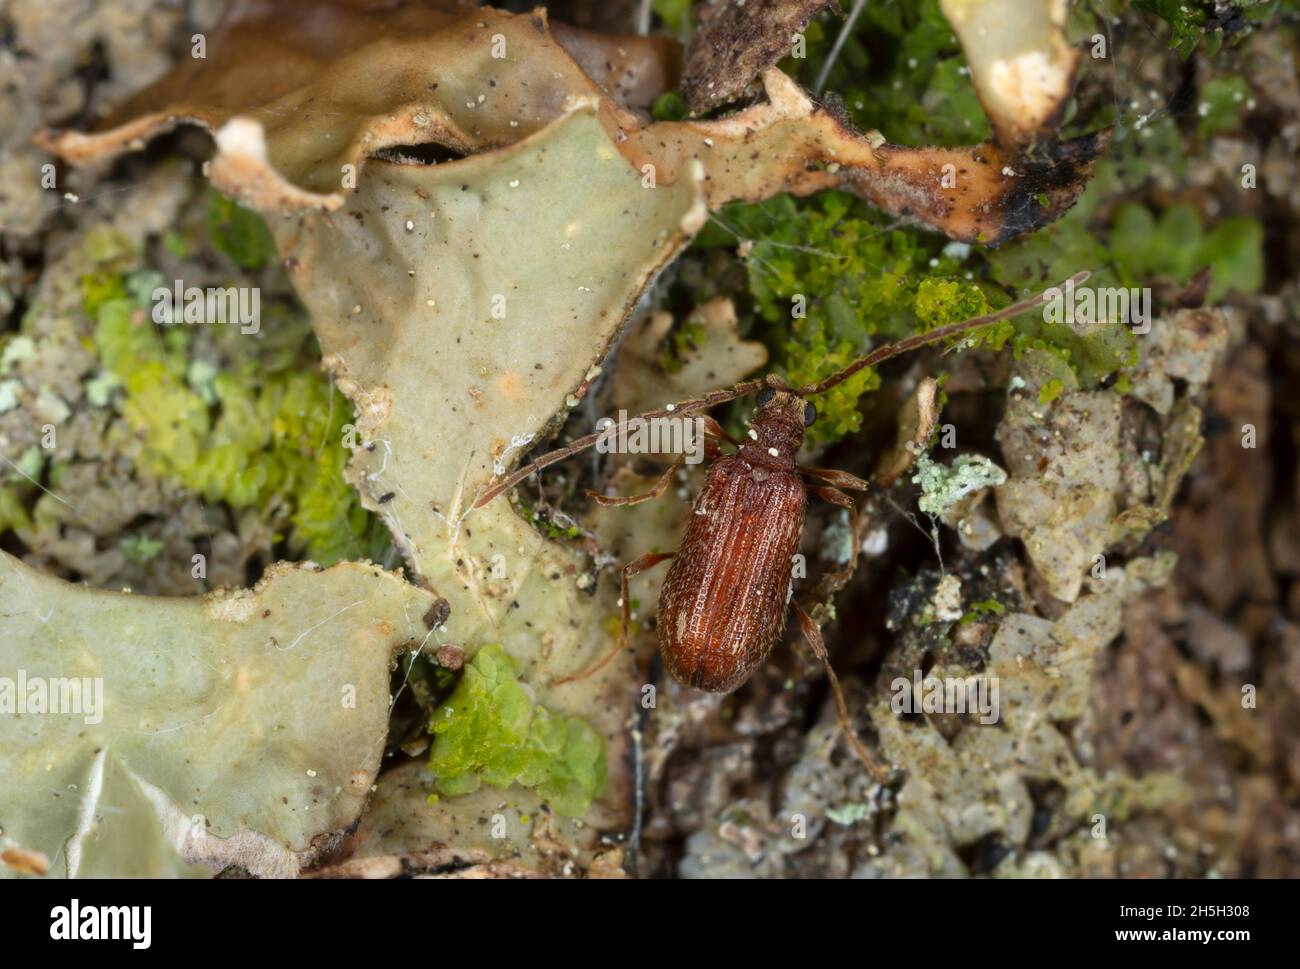 Spider beetle, Ptinus subpillosus on lungwort, Lobaria pulmonaria, macro photo Stock Photo